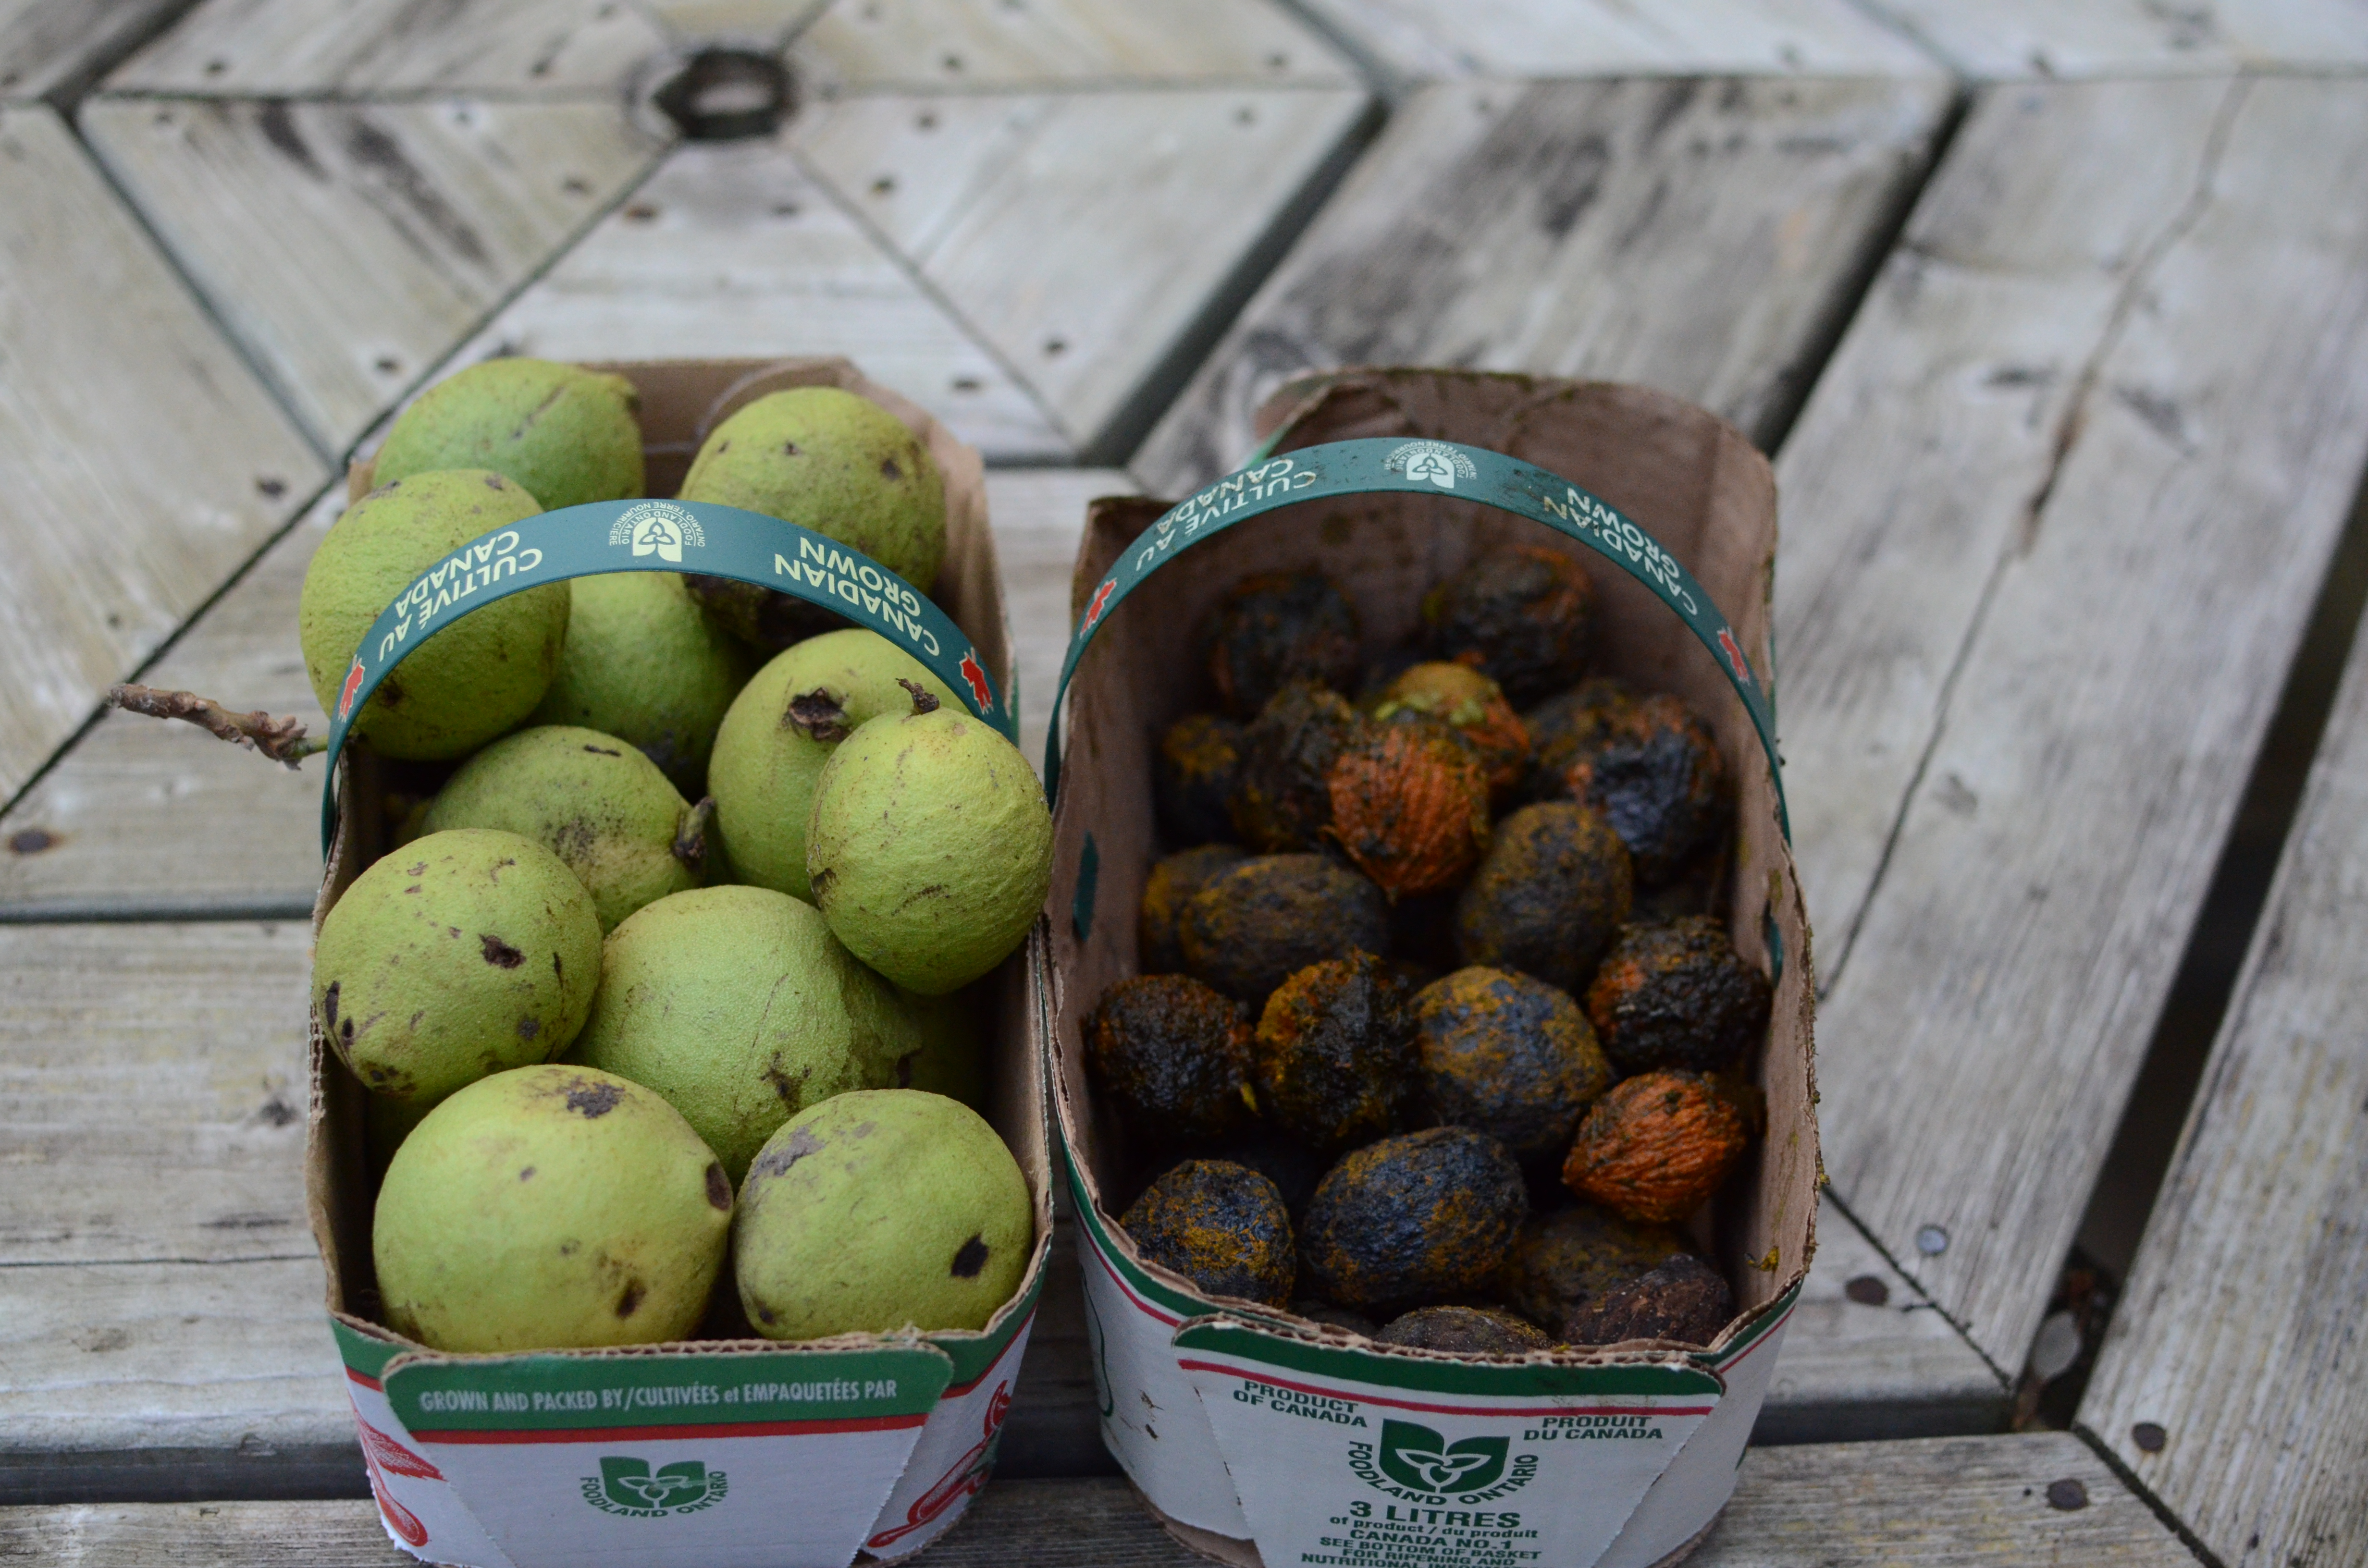 How do you harvest walnuts?